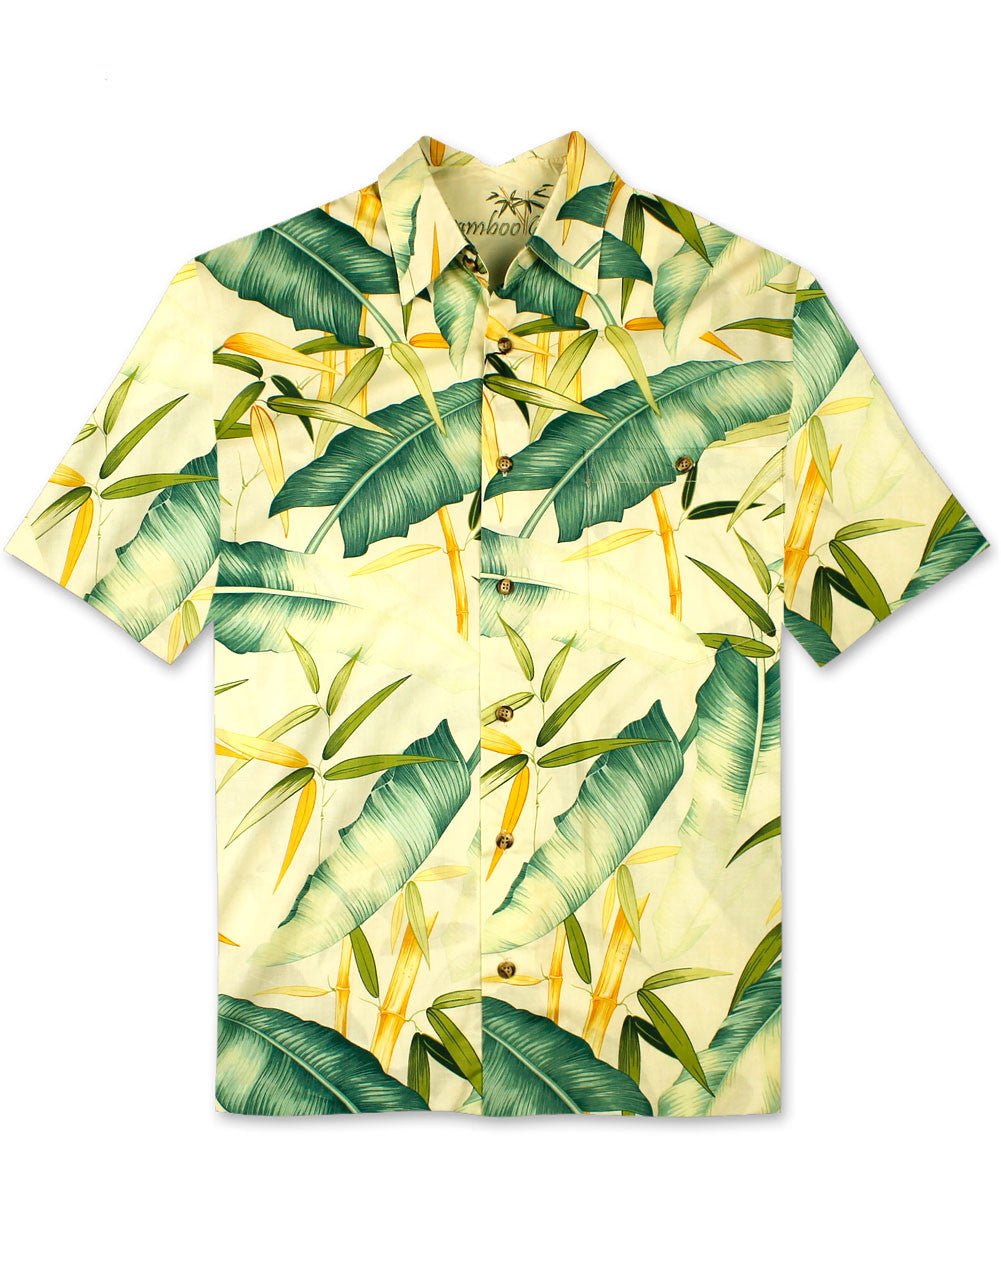 Banana Leaves Cotton Sateen Shirt by Bamboo Cay